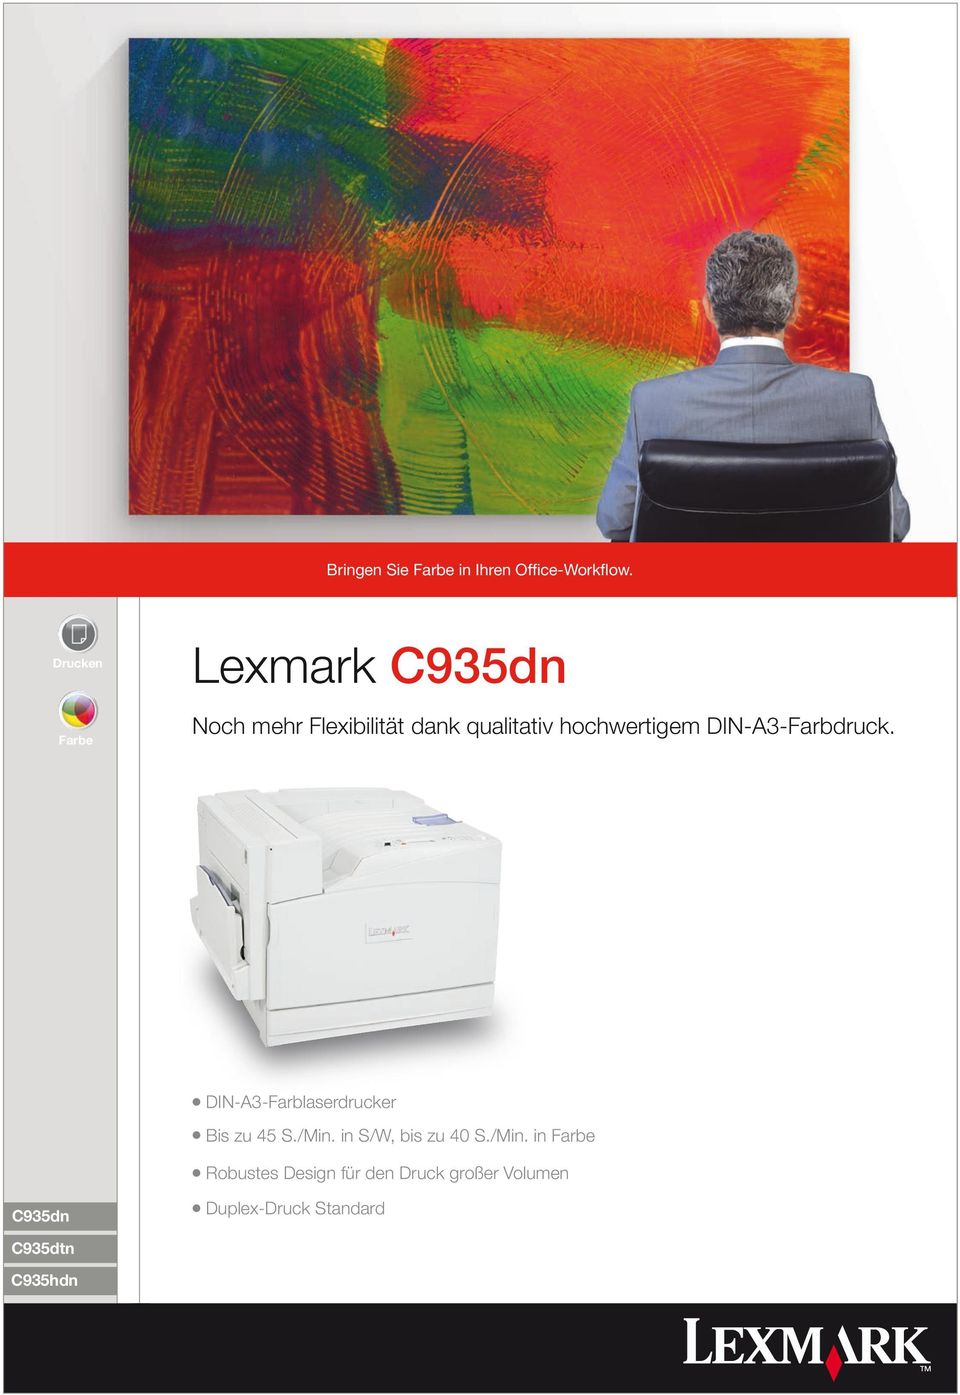 DIN-A3-Farbdruck. l DIN-A3-Farblaserdrucker l Bis zu 45 S./Min.